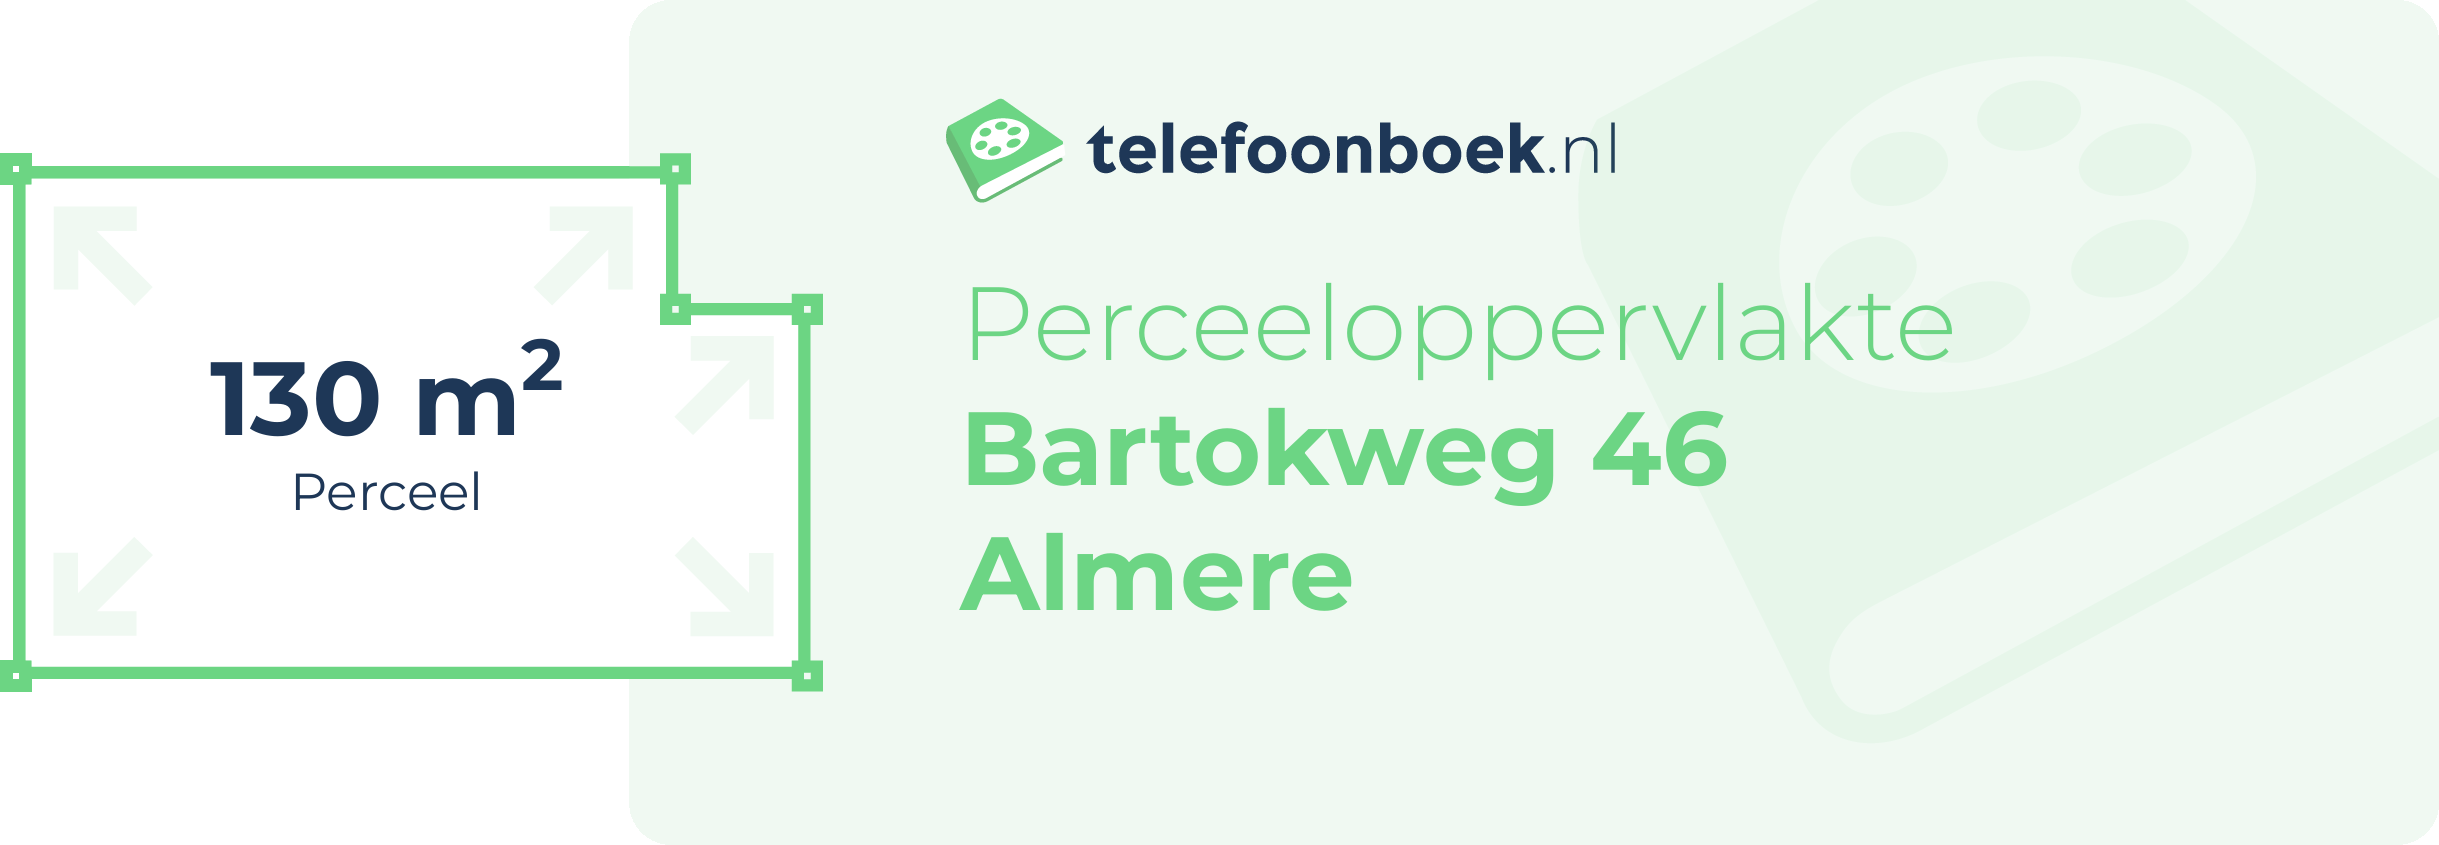 Perceeloppervlakte Bartokweg 46 Almere